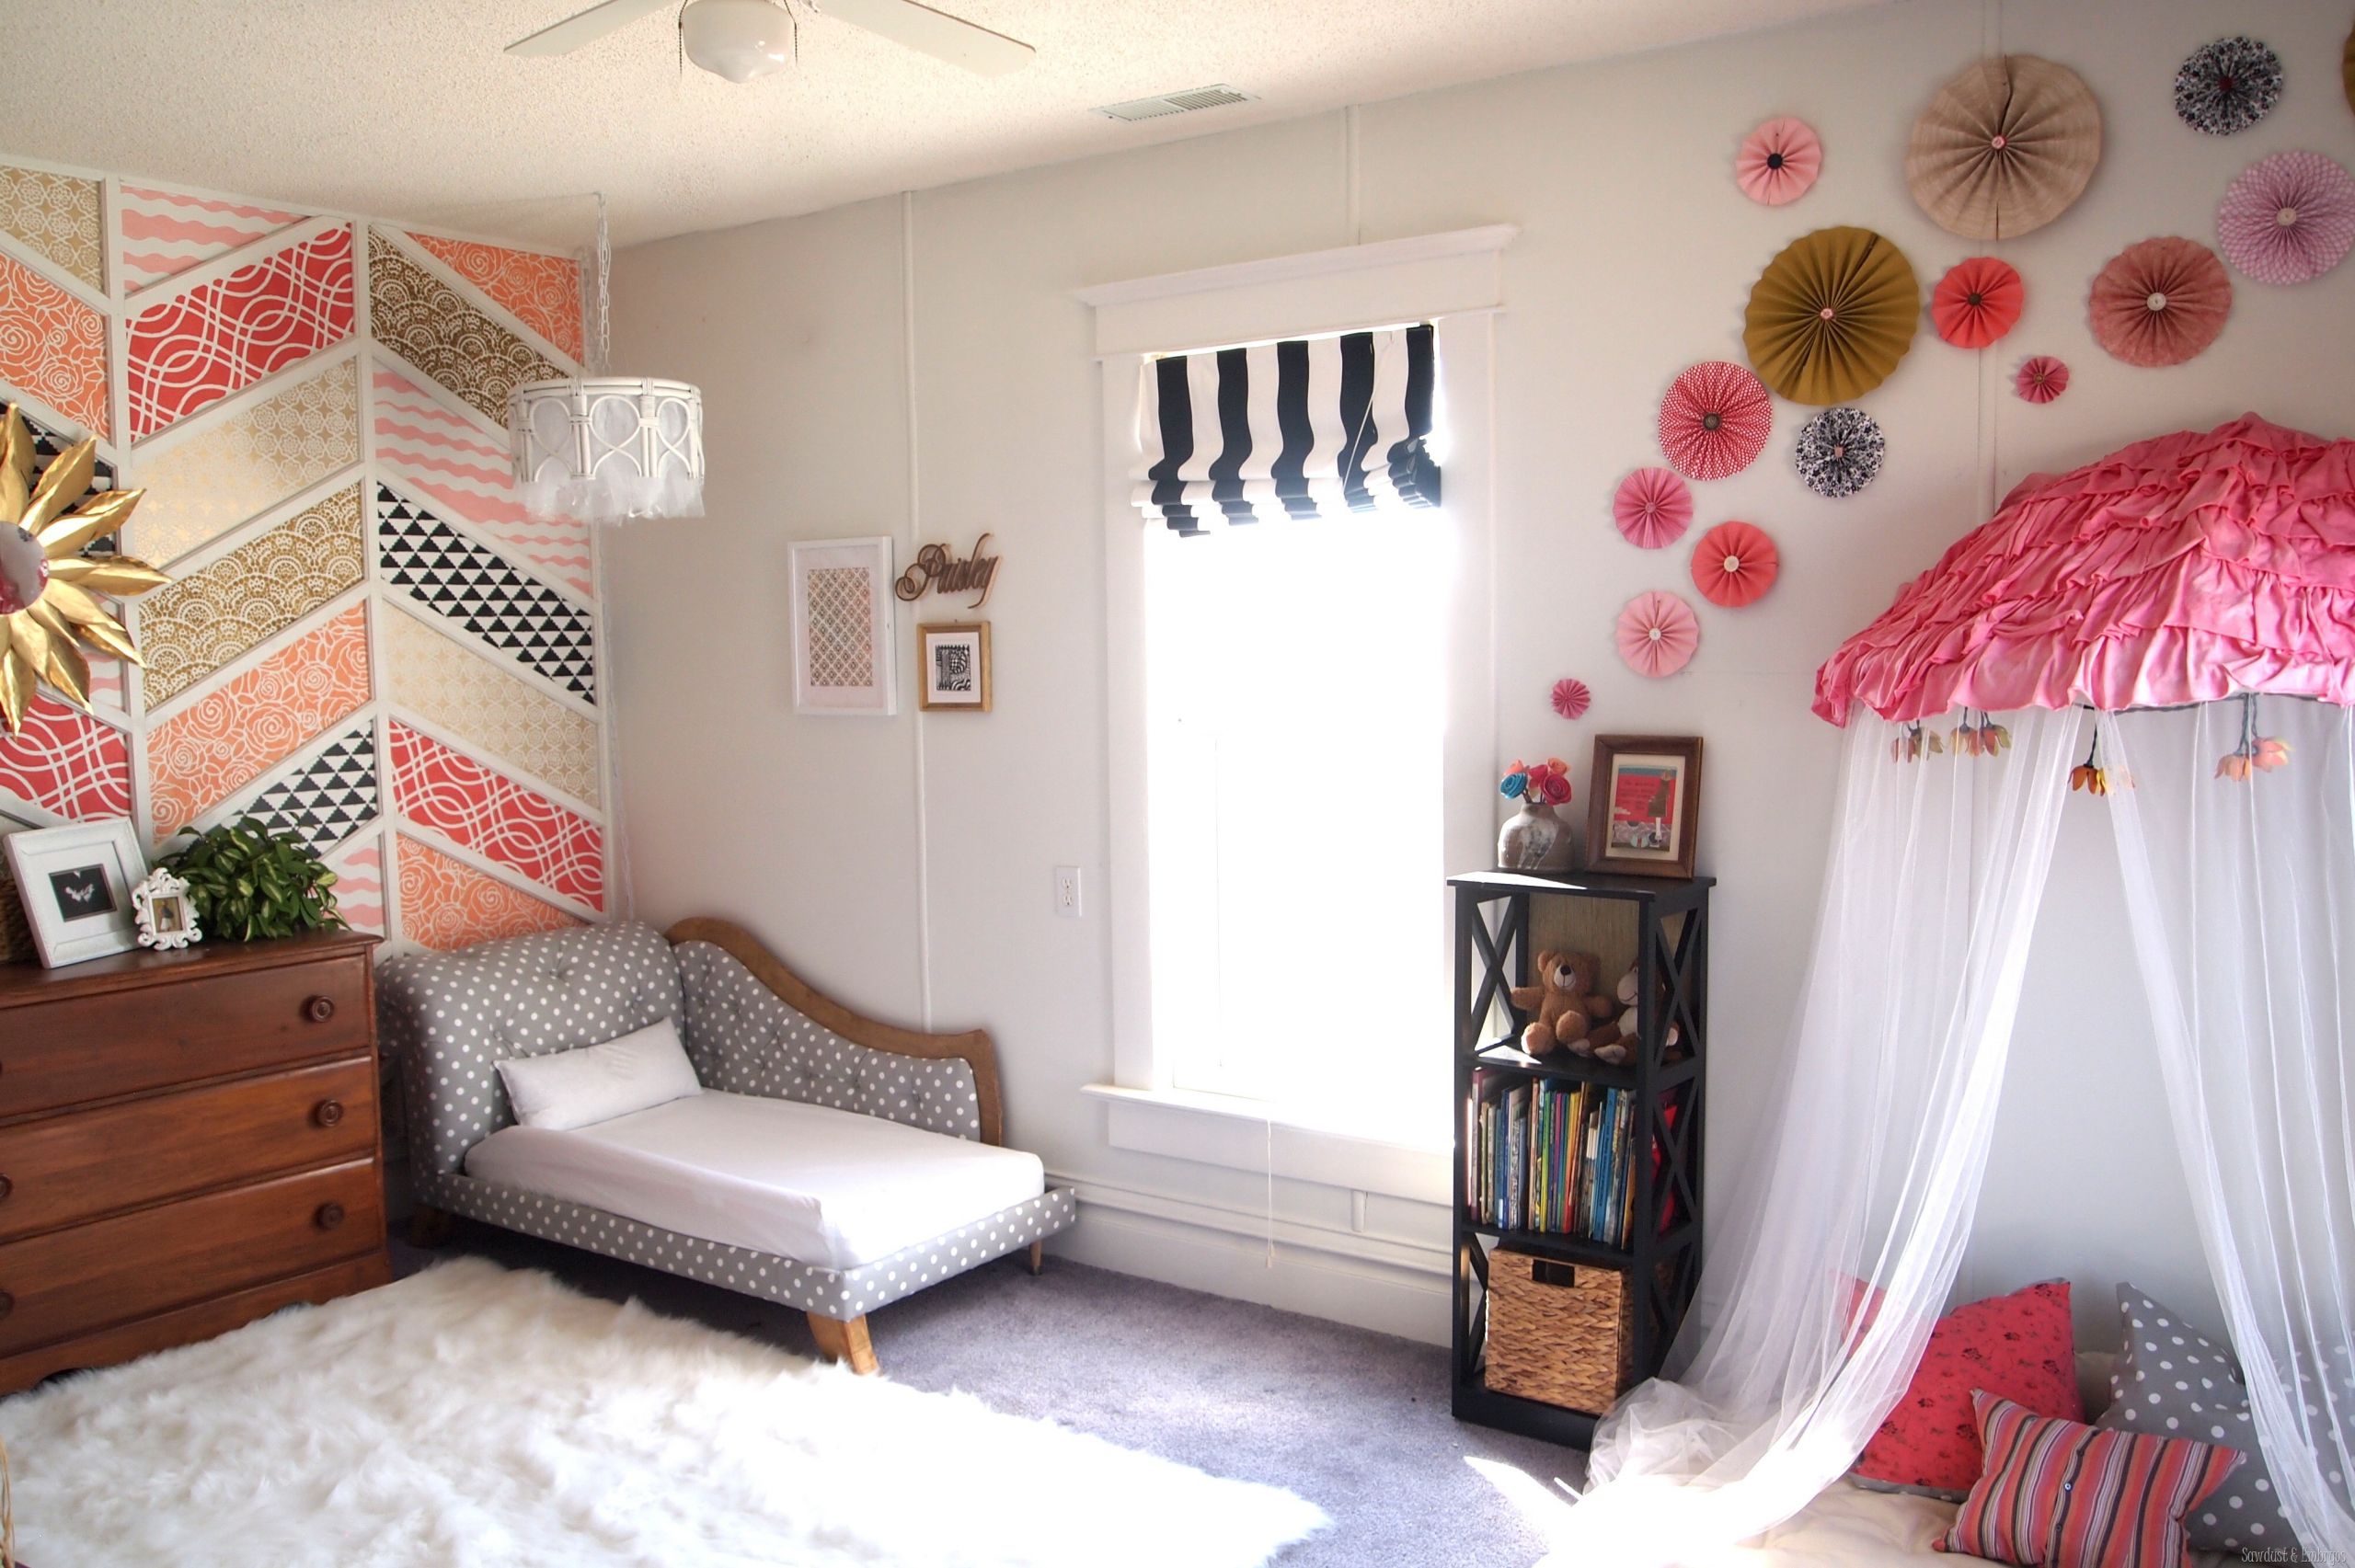 DIY Room Decor Ideas For Girls
 DIY Paper Pinwheel Wall Collage Tutorial